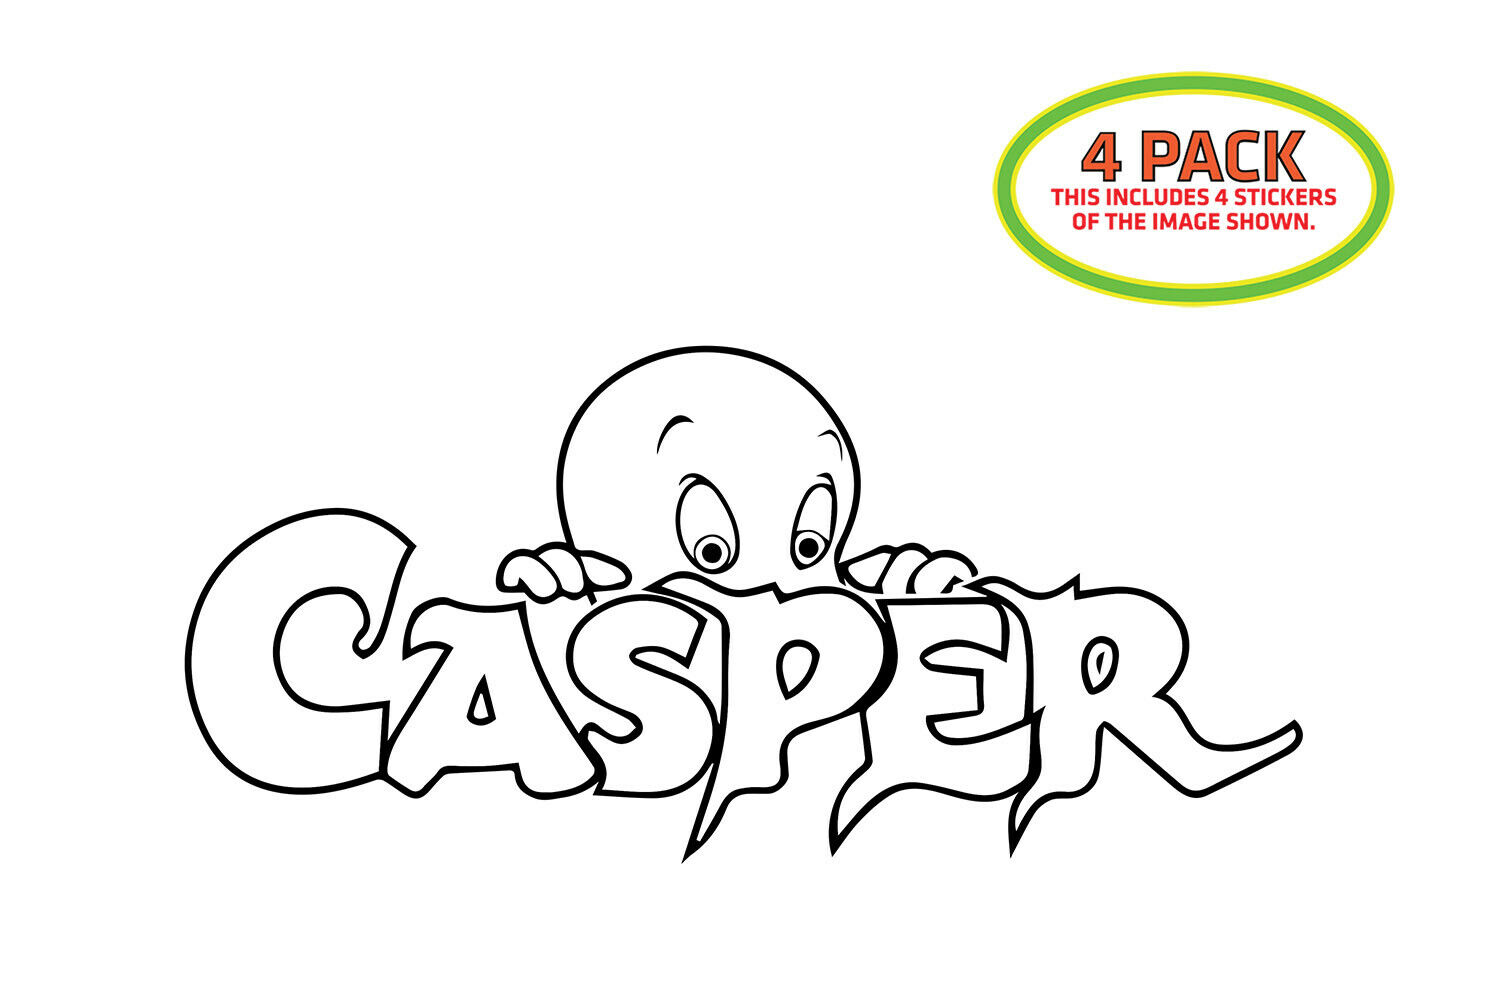 Casper Sticker Vinyl Decal 4 Pack